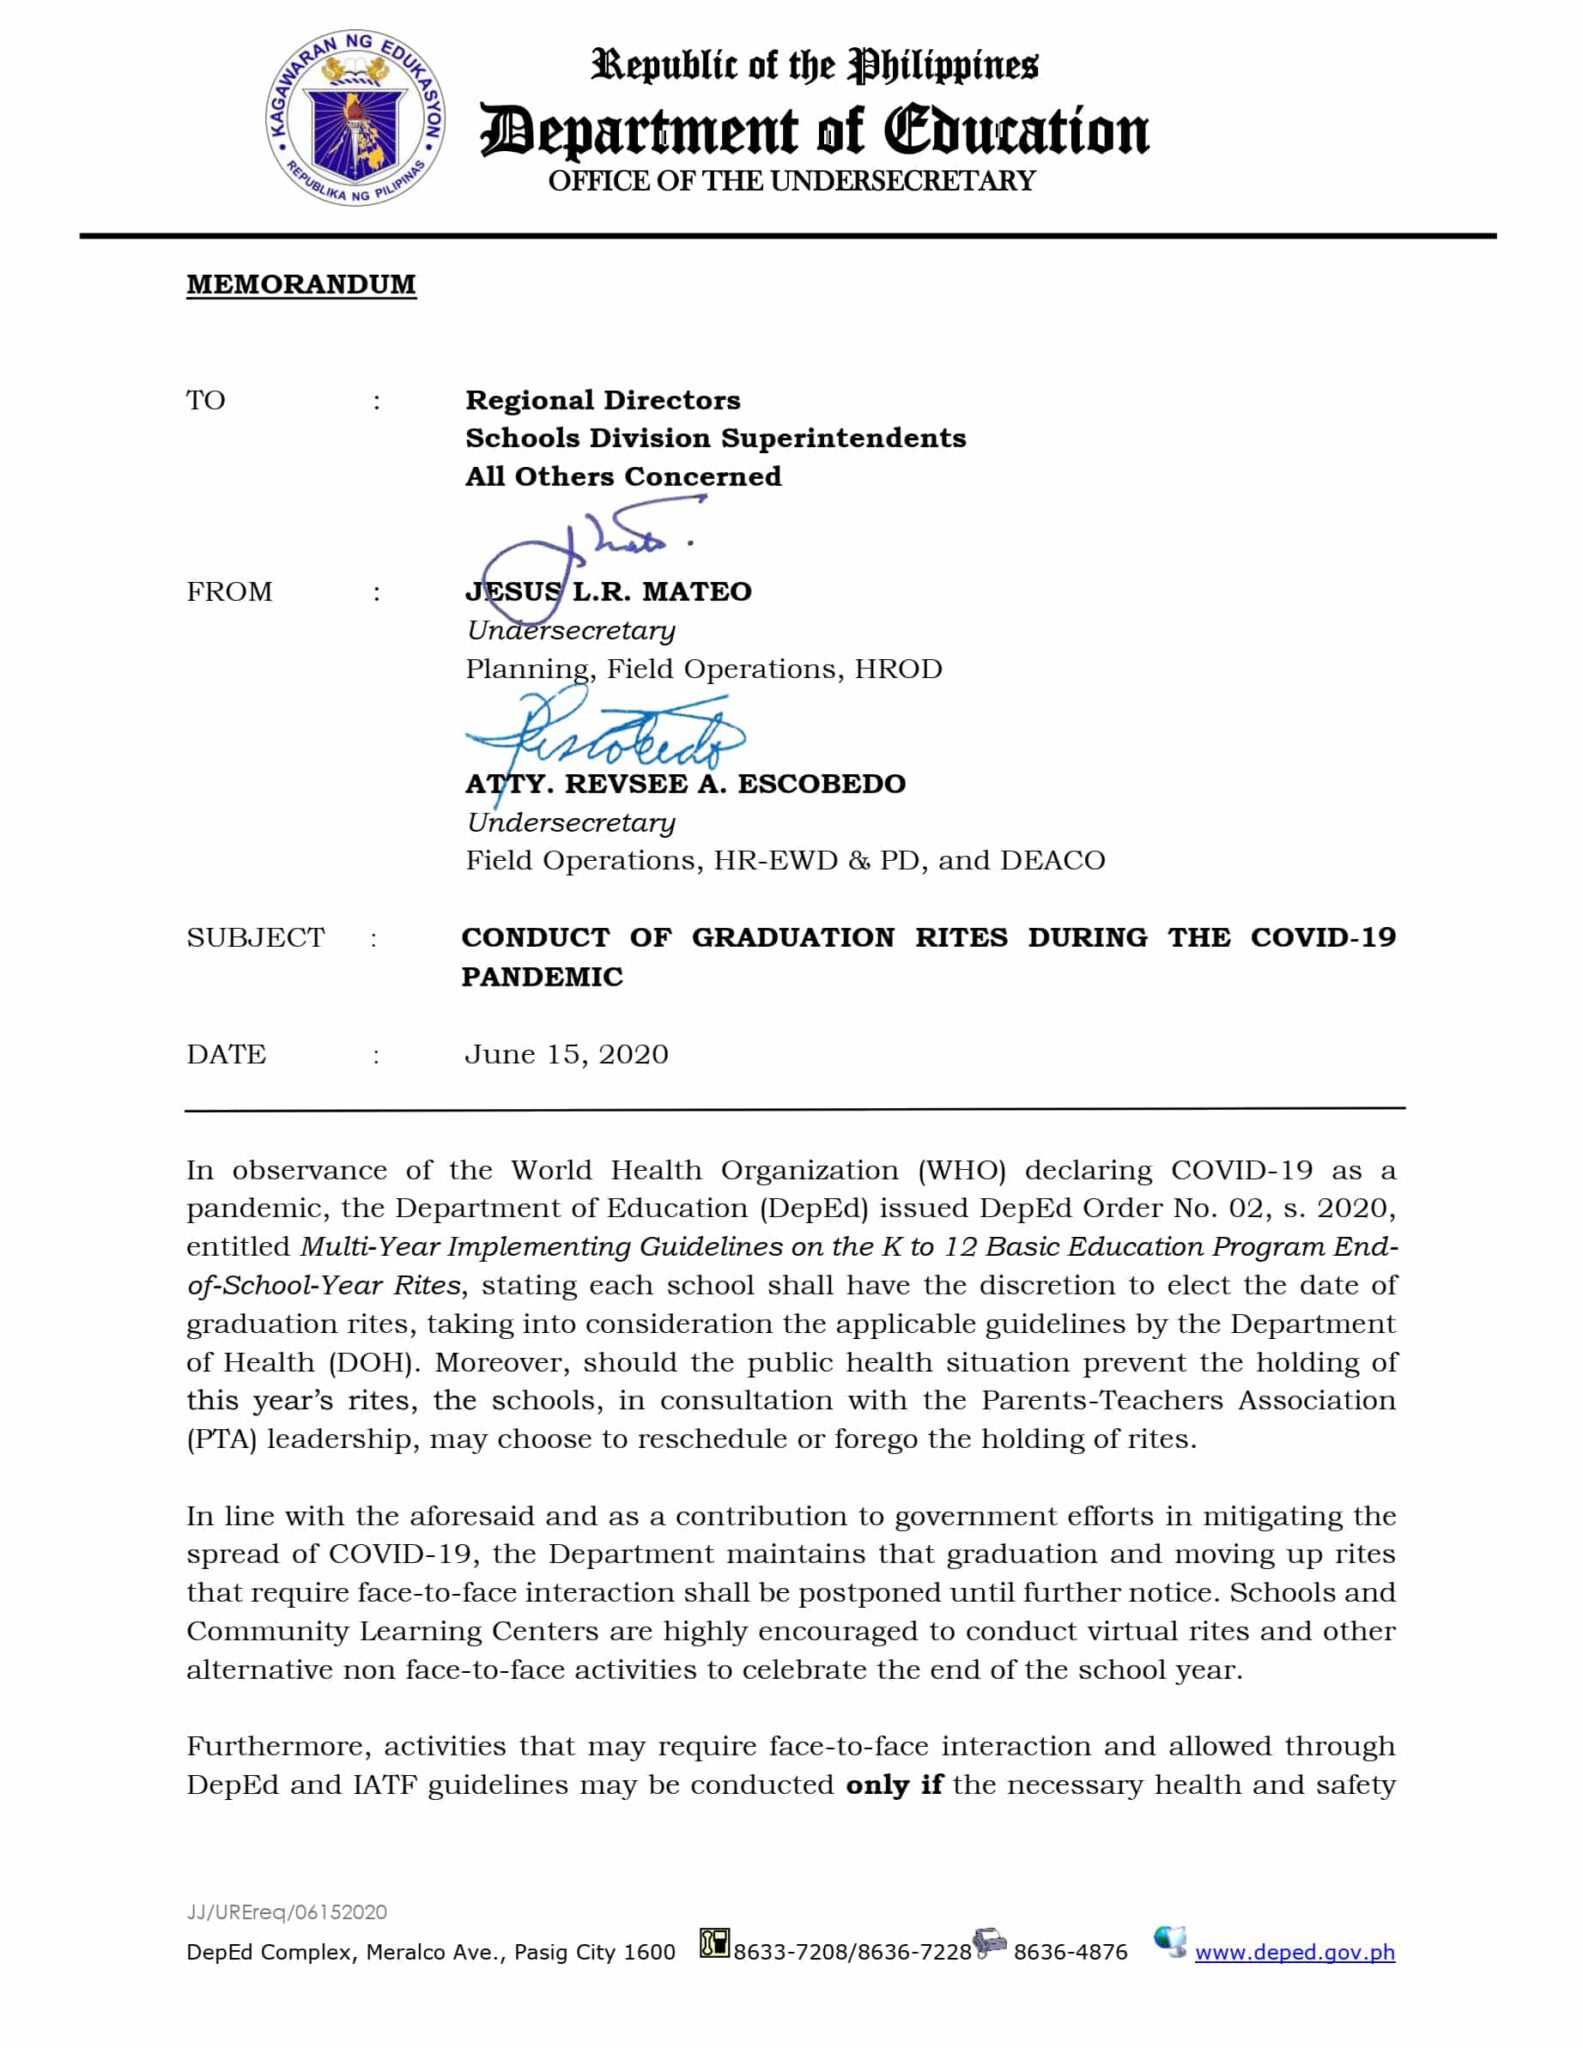 DepEd Memorandum on the Conduct of Graduation Rites During the COVID19